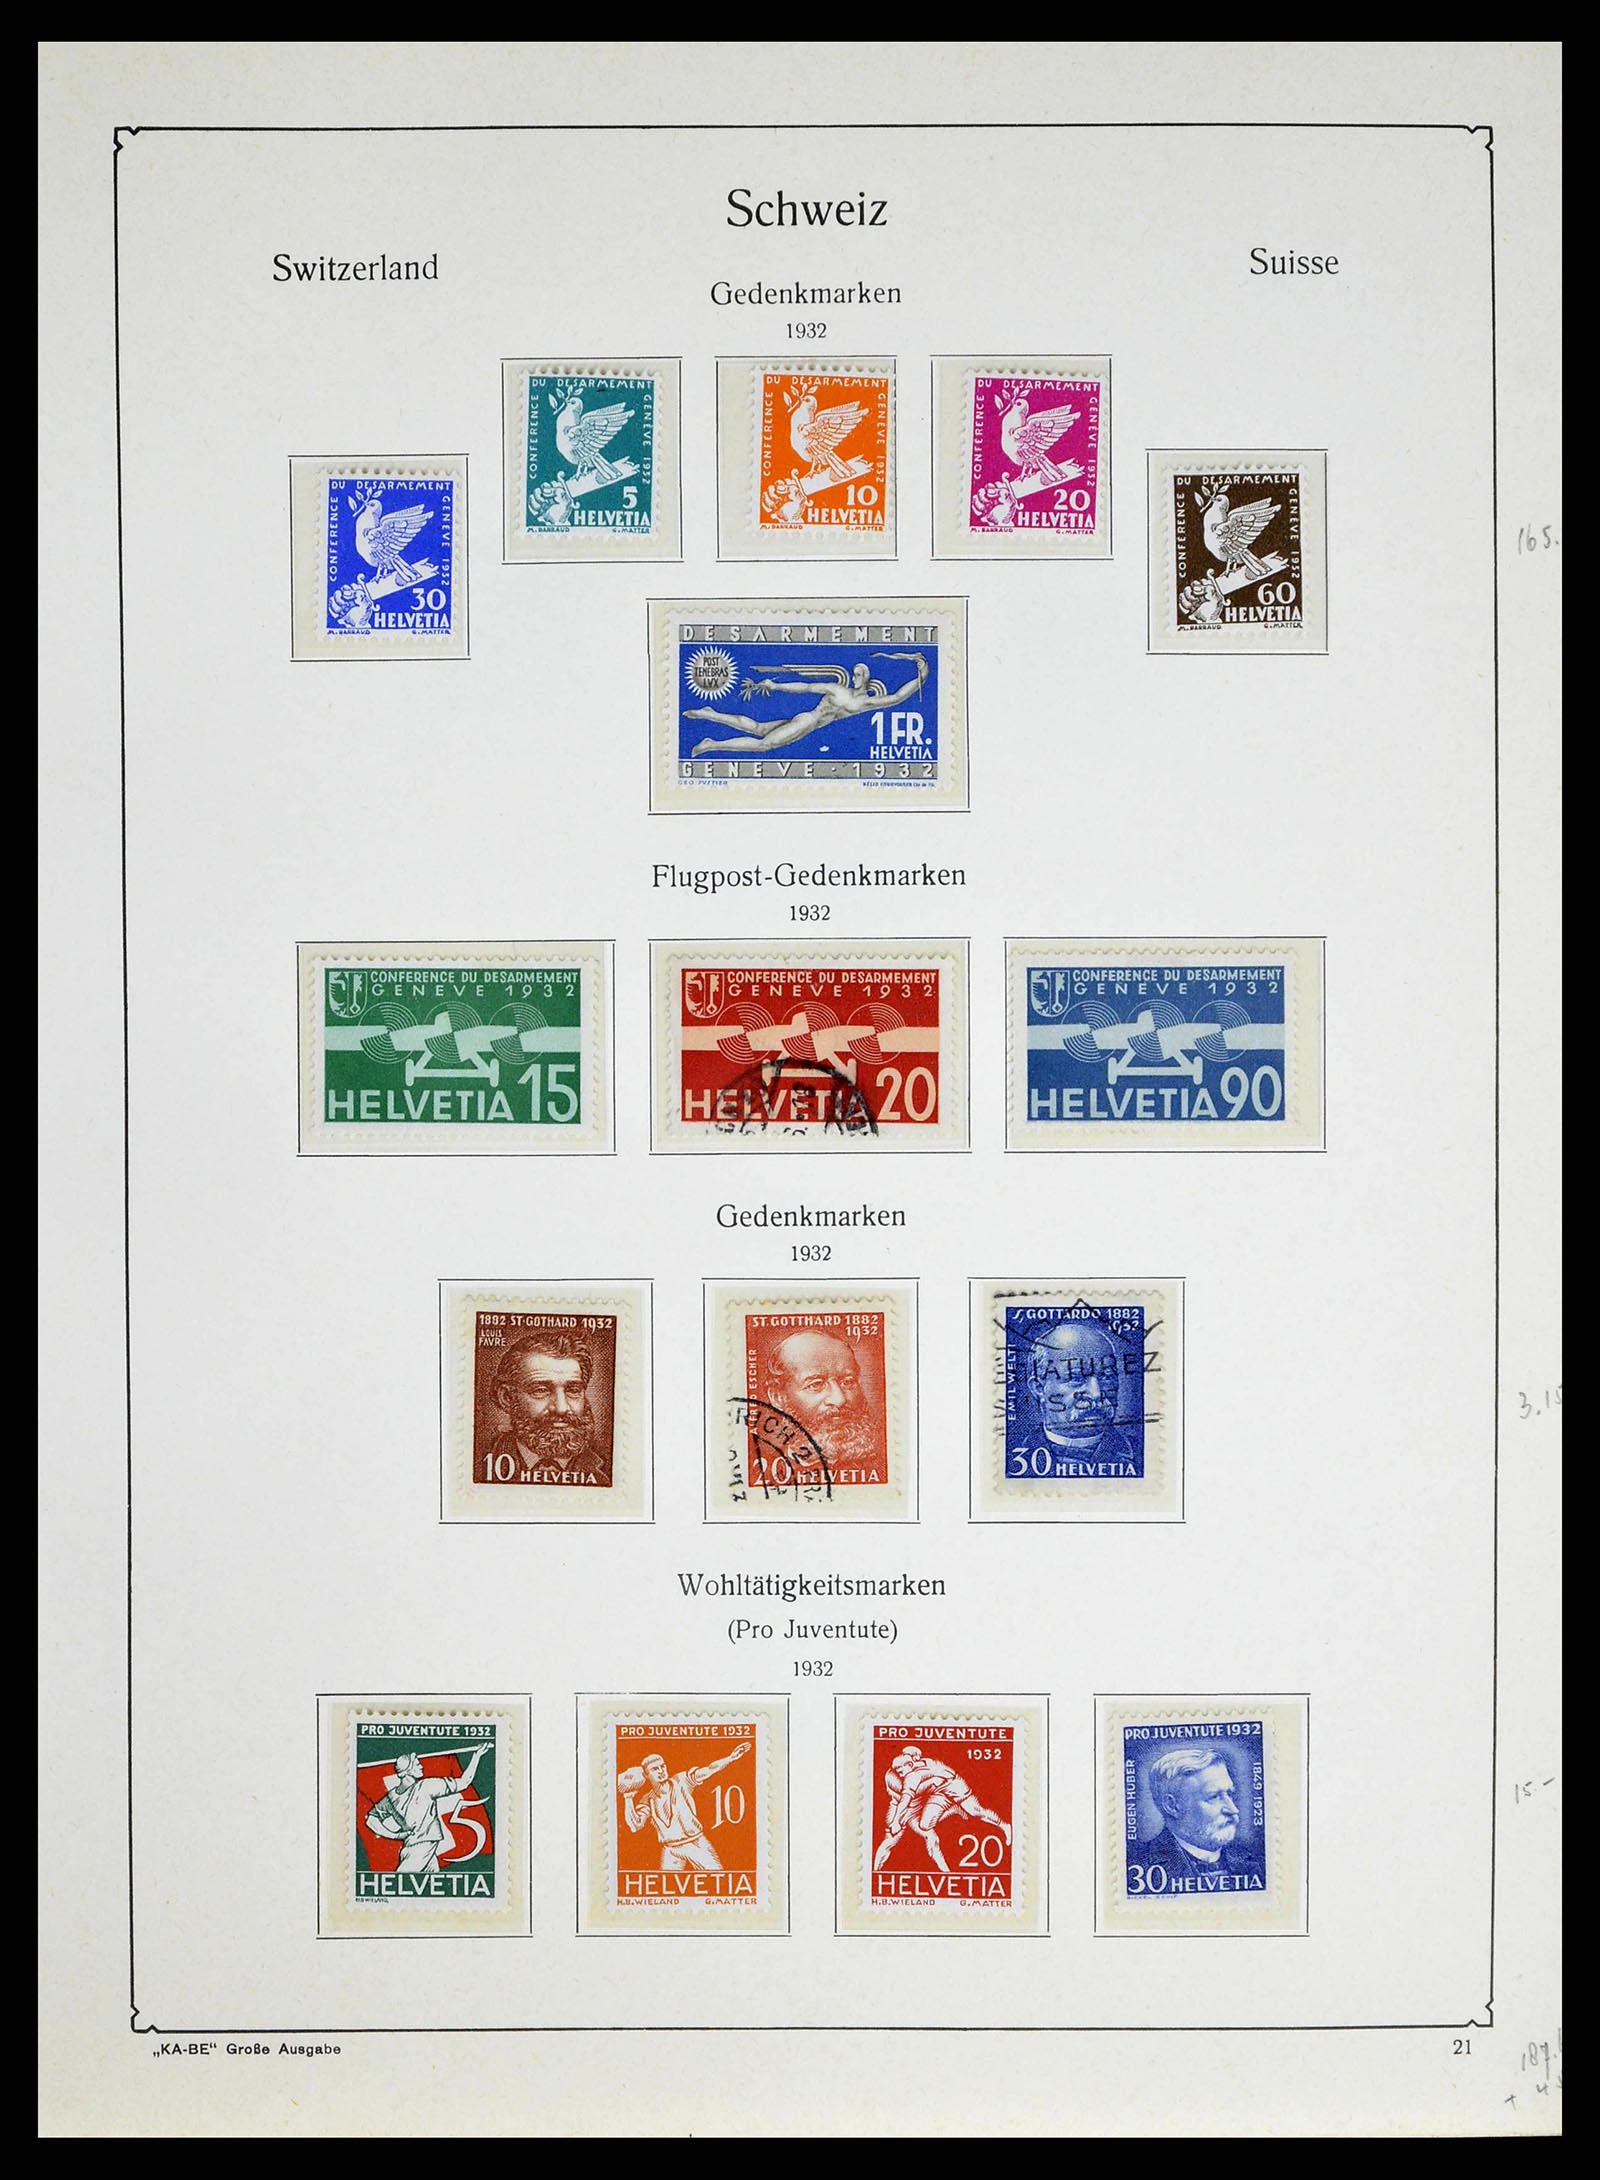 38706 0021 - Stamp collection 38706 Switzerland 1854-1985.